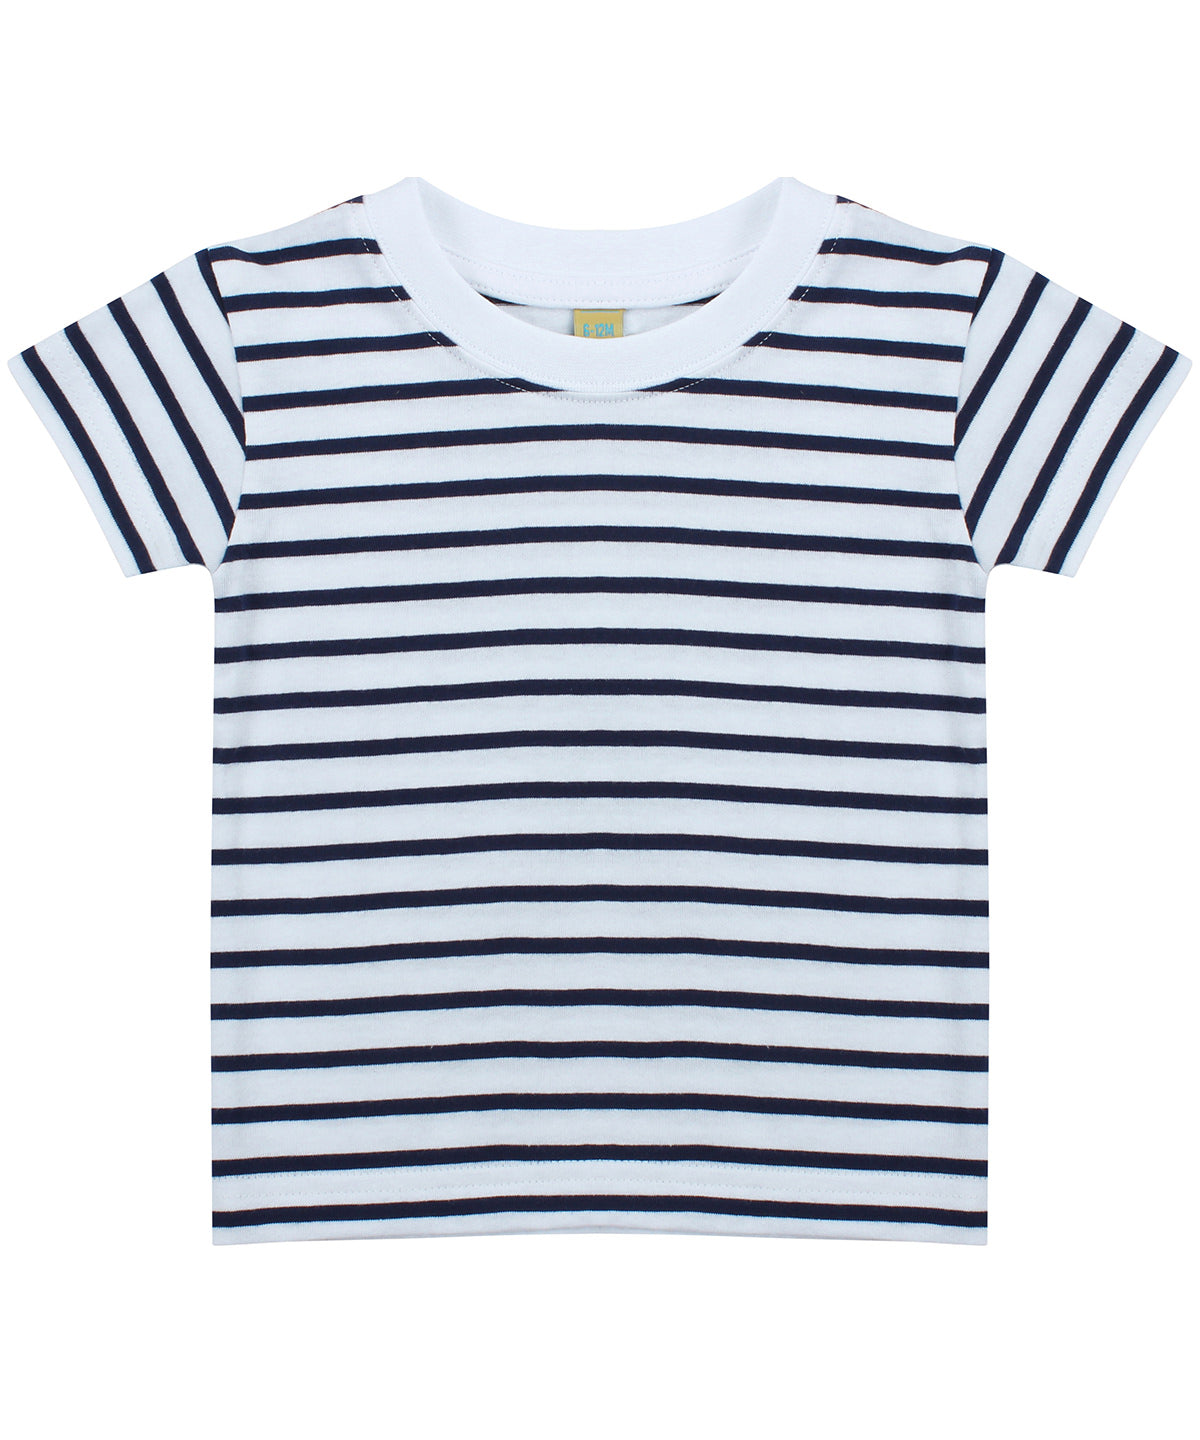 Personalised T-Shirts - Stripes Larkwood Short sleeve striped t-shirt